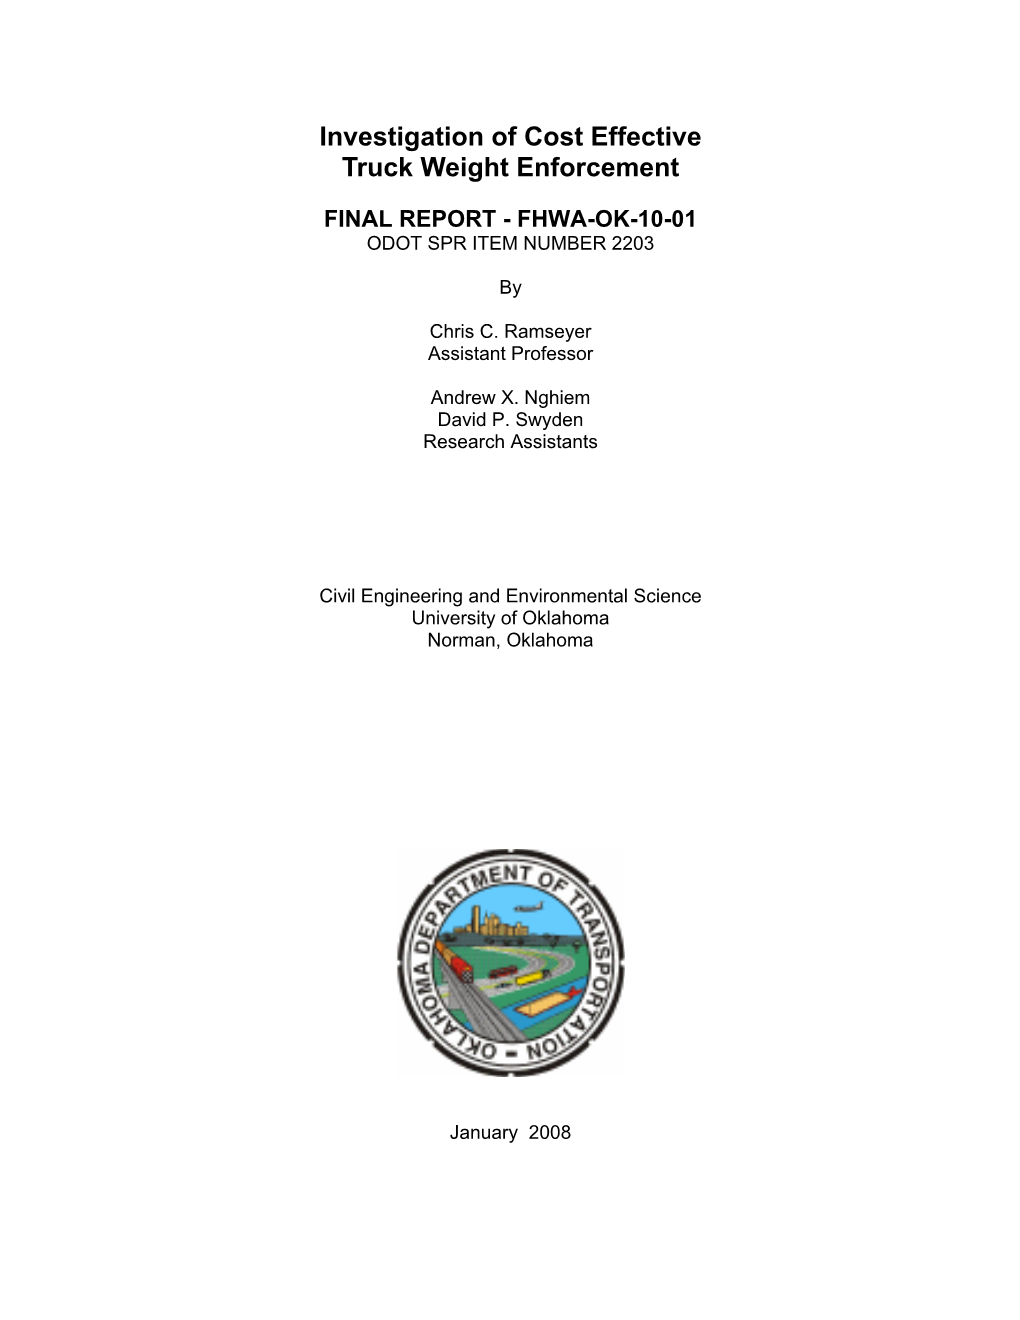 Investigation of Cost Effective Truck Weight Enforcement